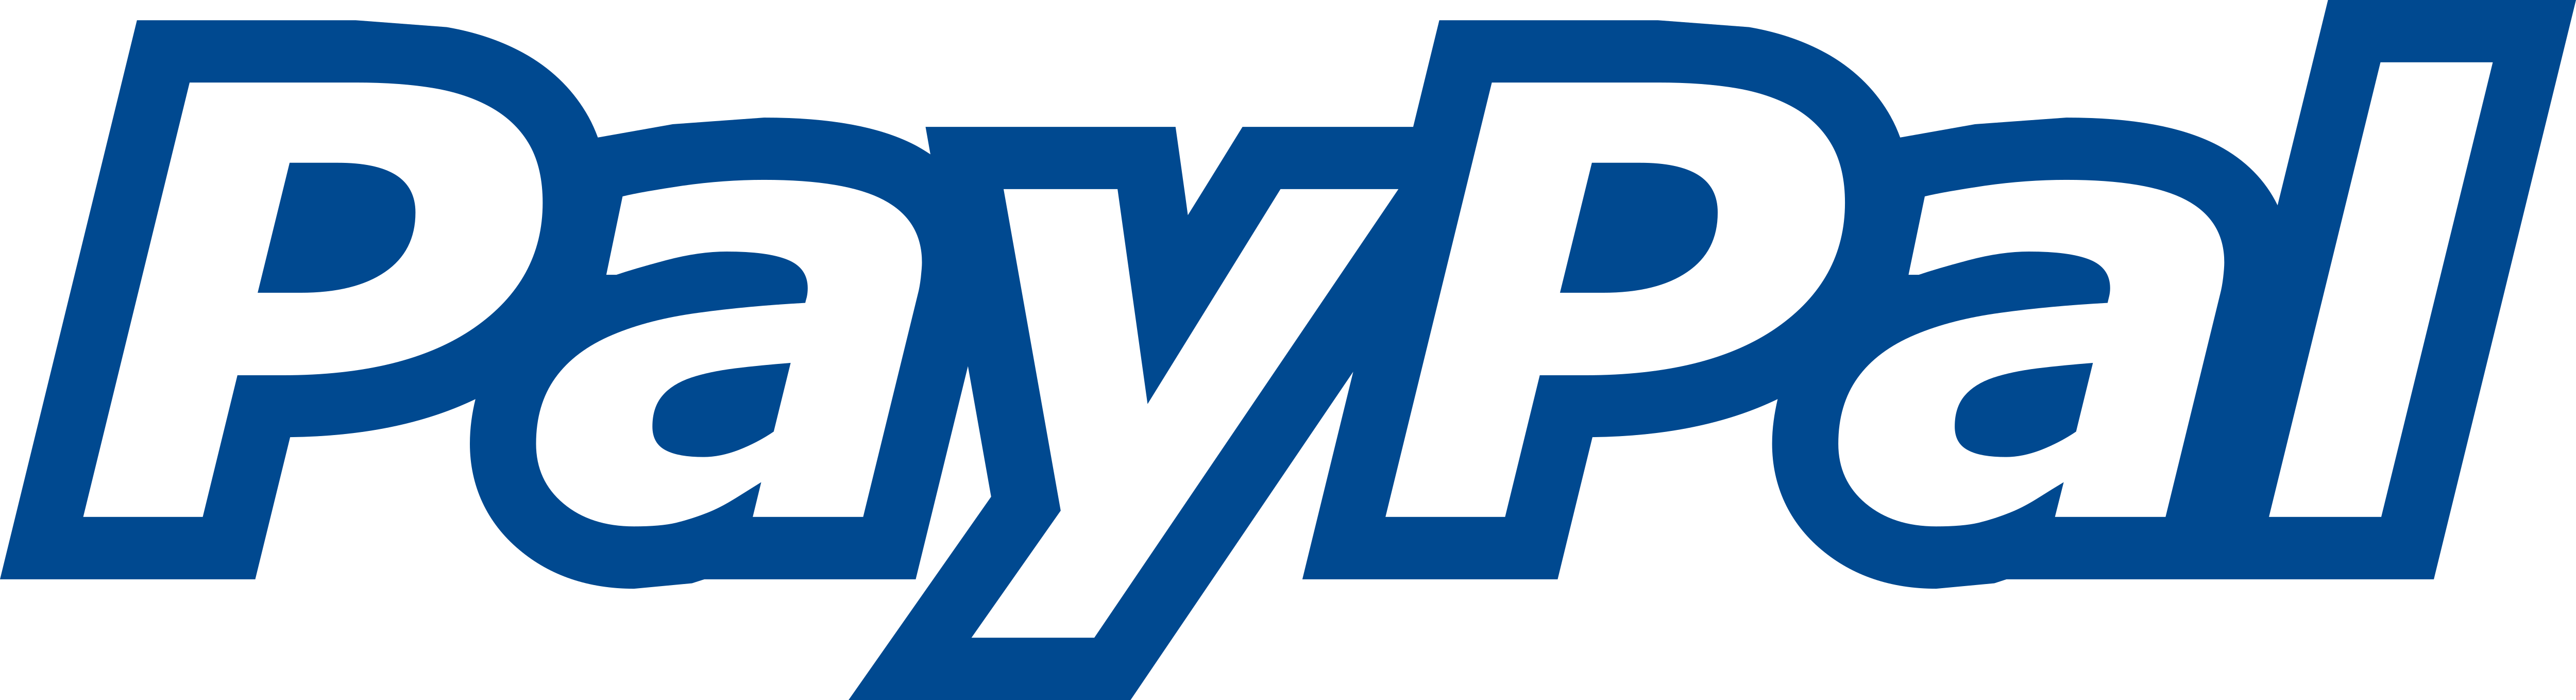 paypal white logo png